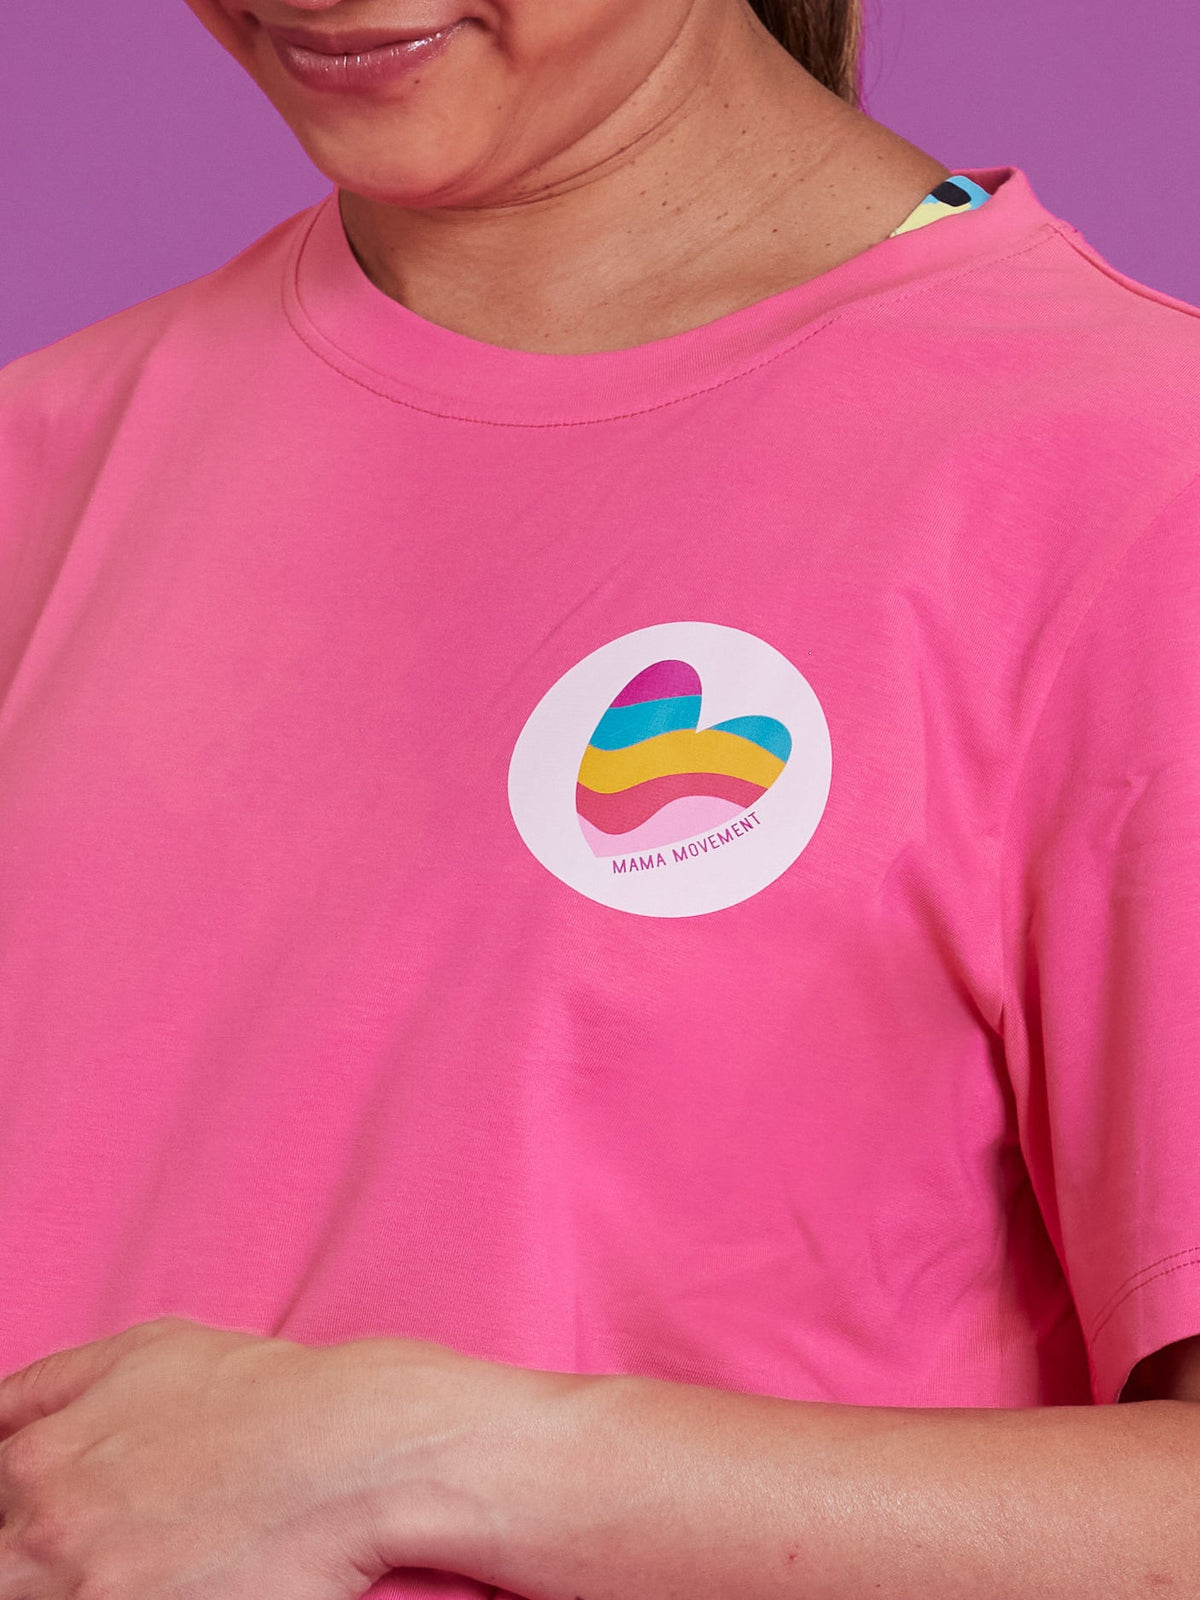 Dolly Pink Rainbow Heart Positivi-Tee - pink tee with rainbow